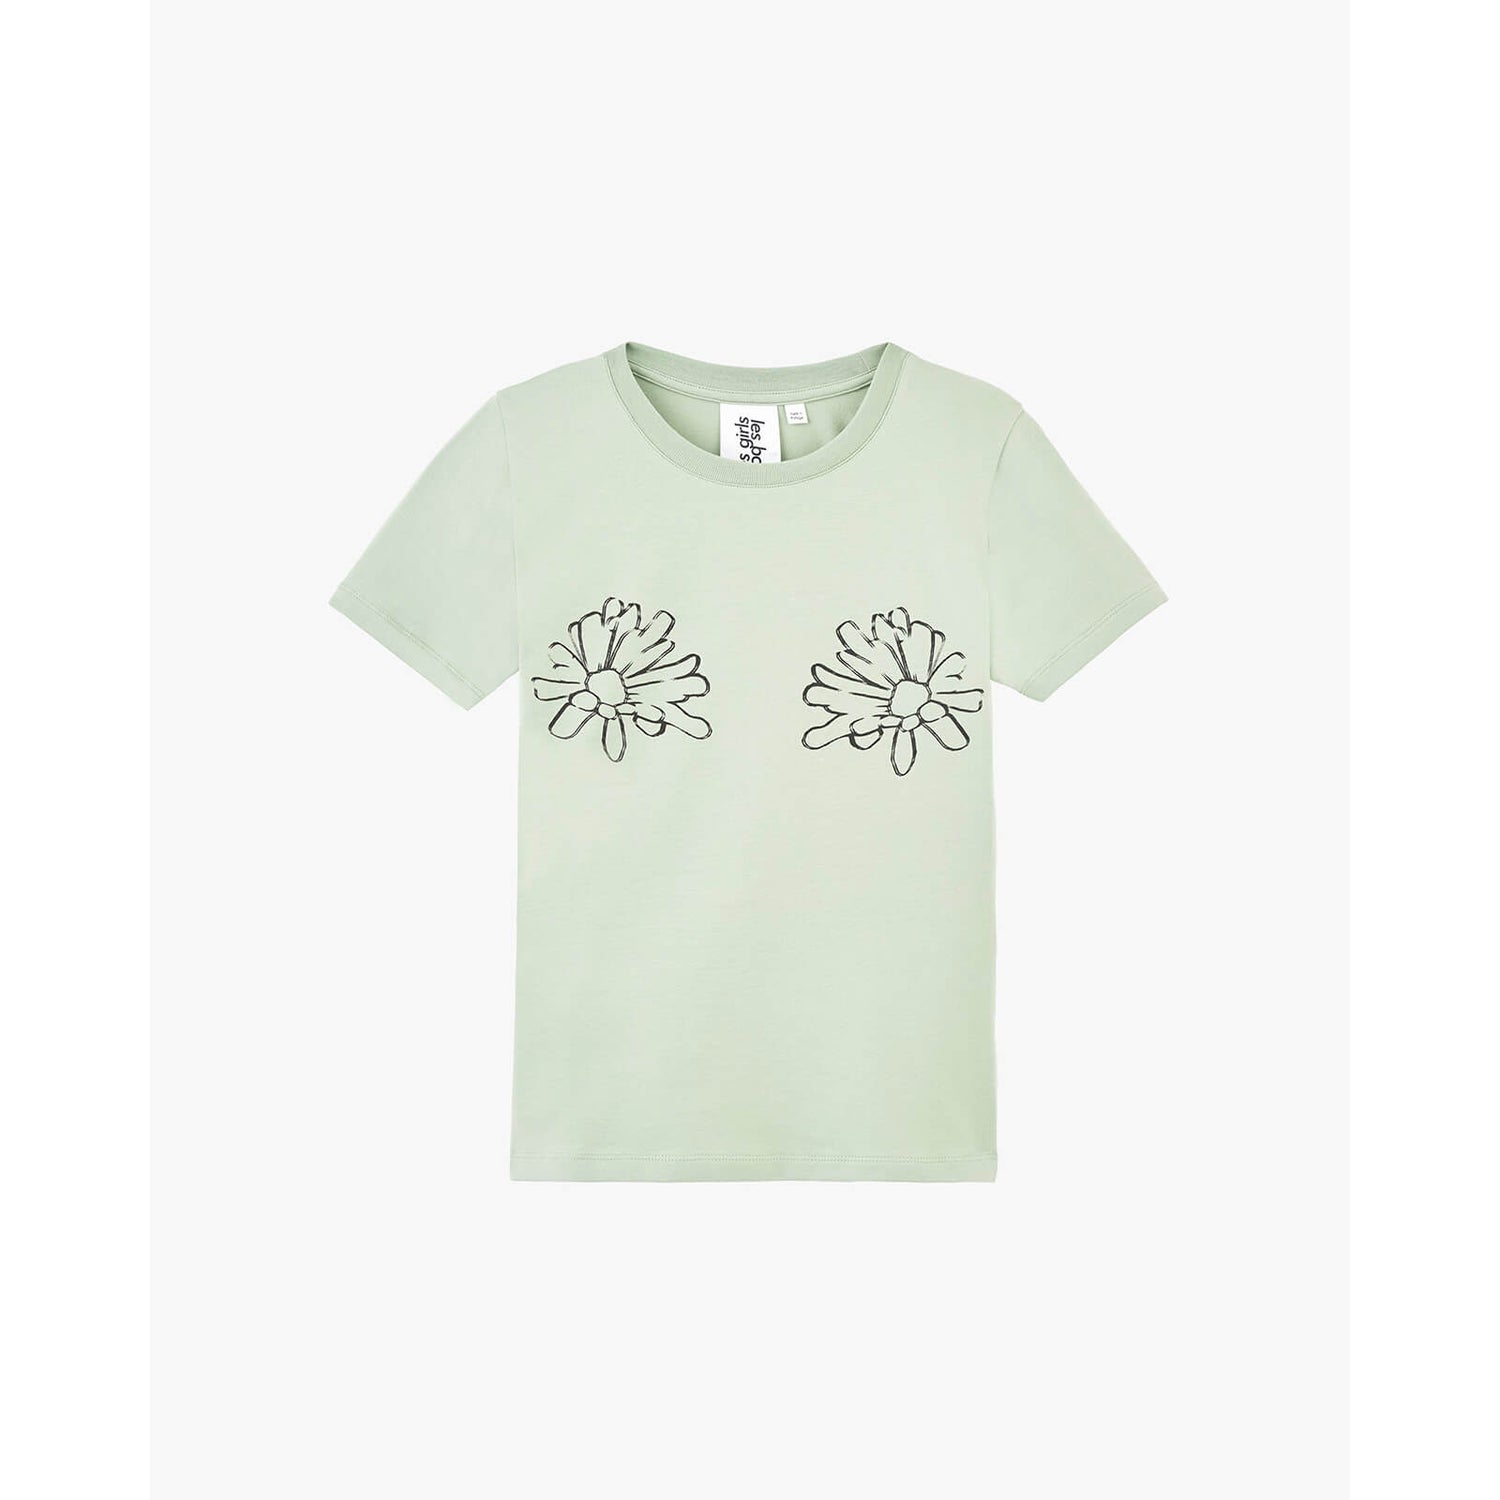 Les Girls Les Boys Floral Print Baby T-Shirt - Sage